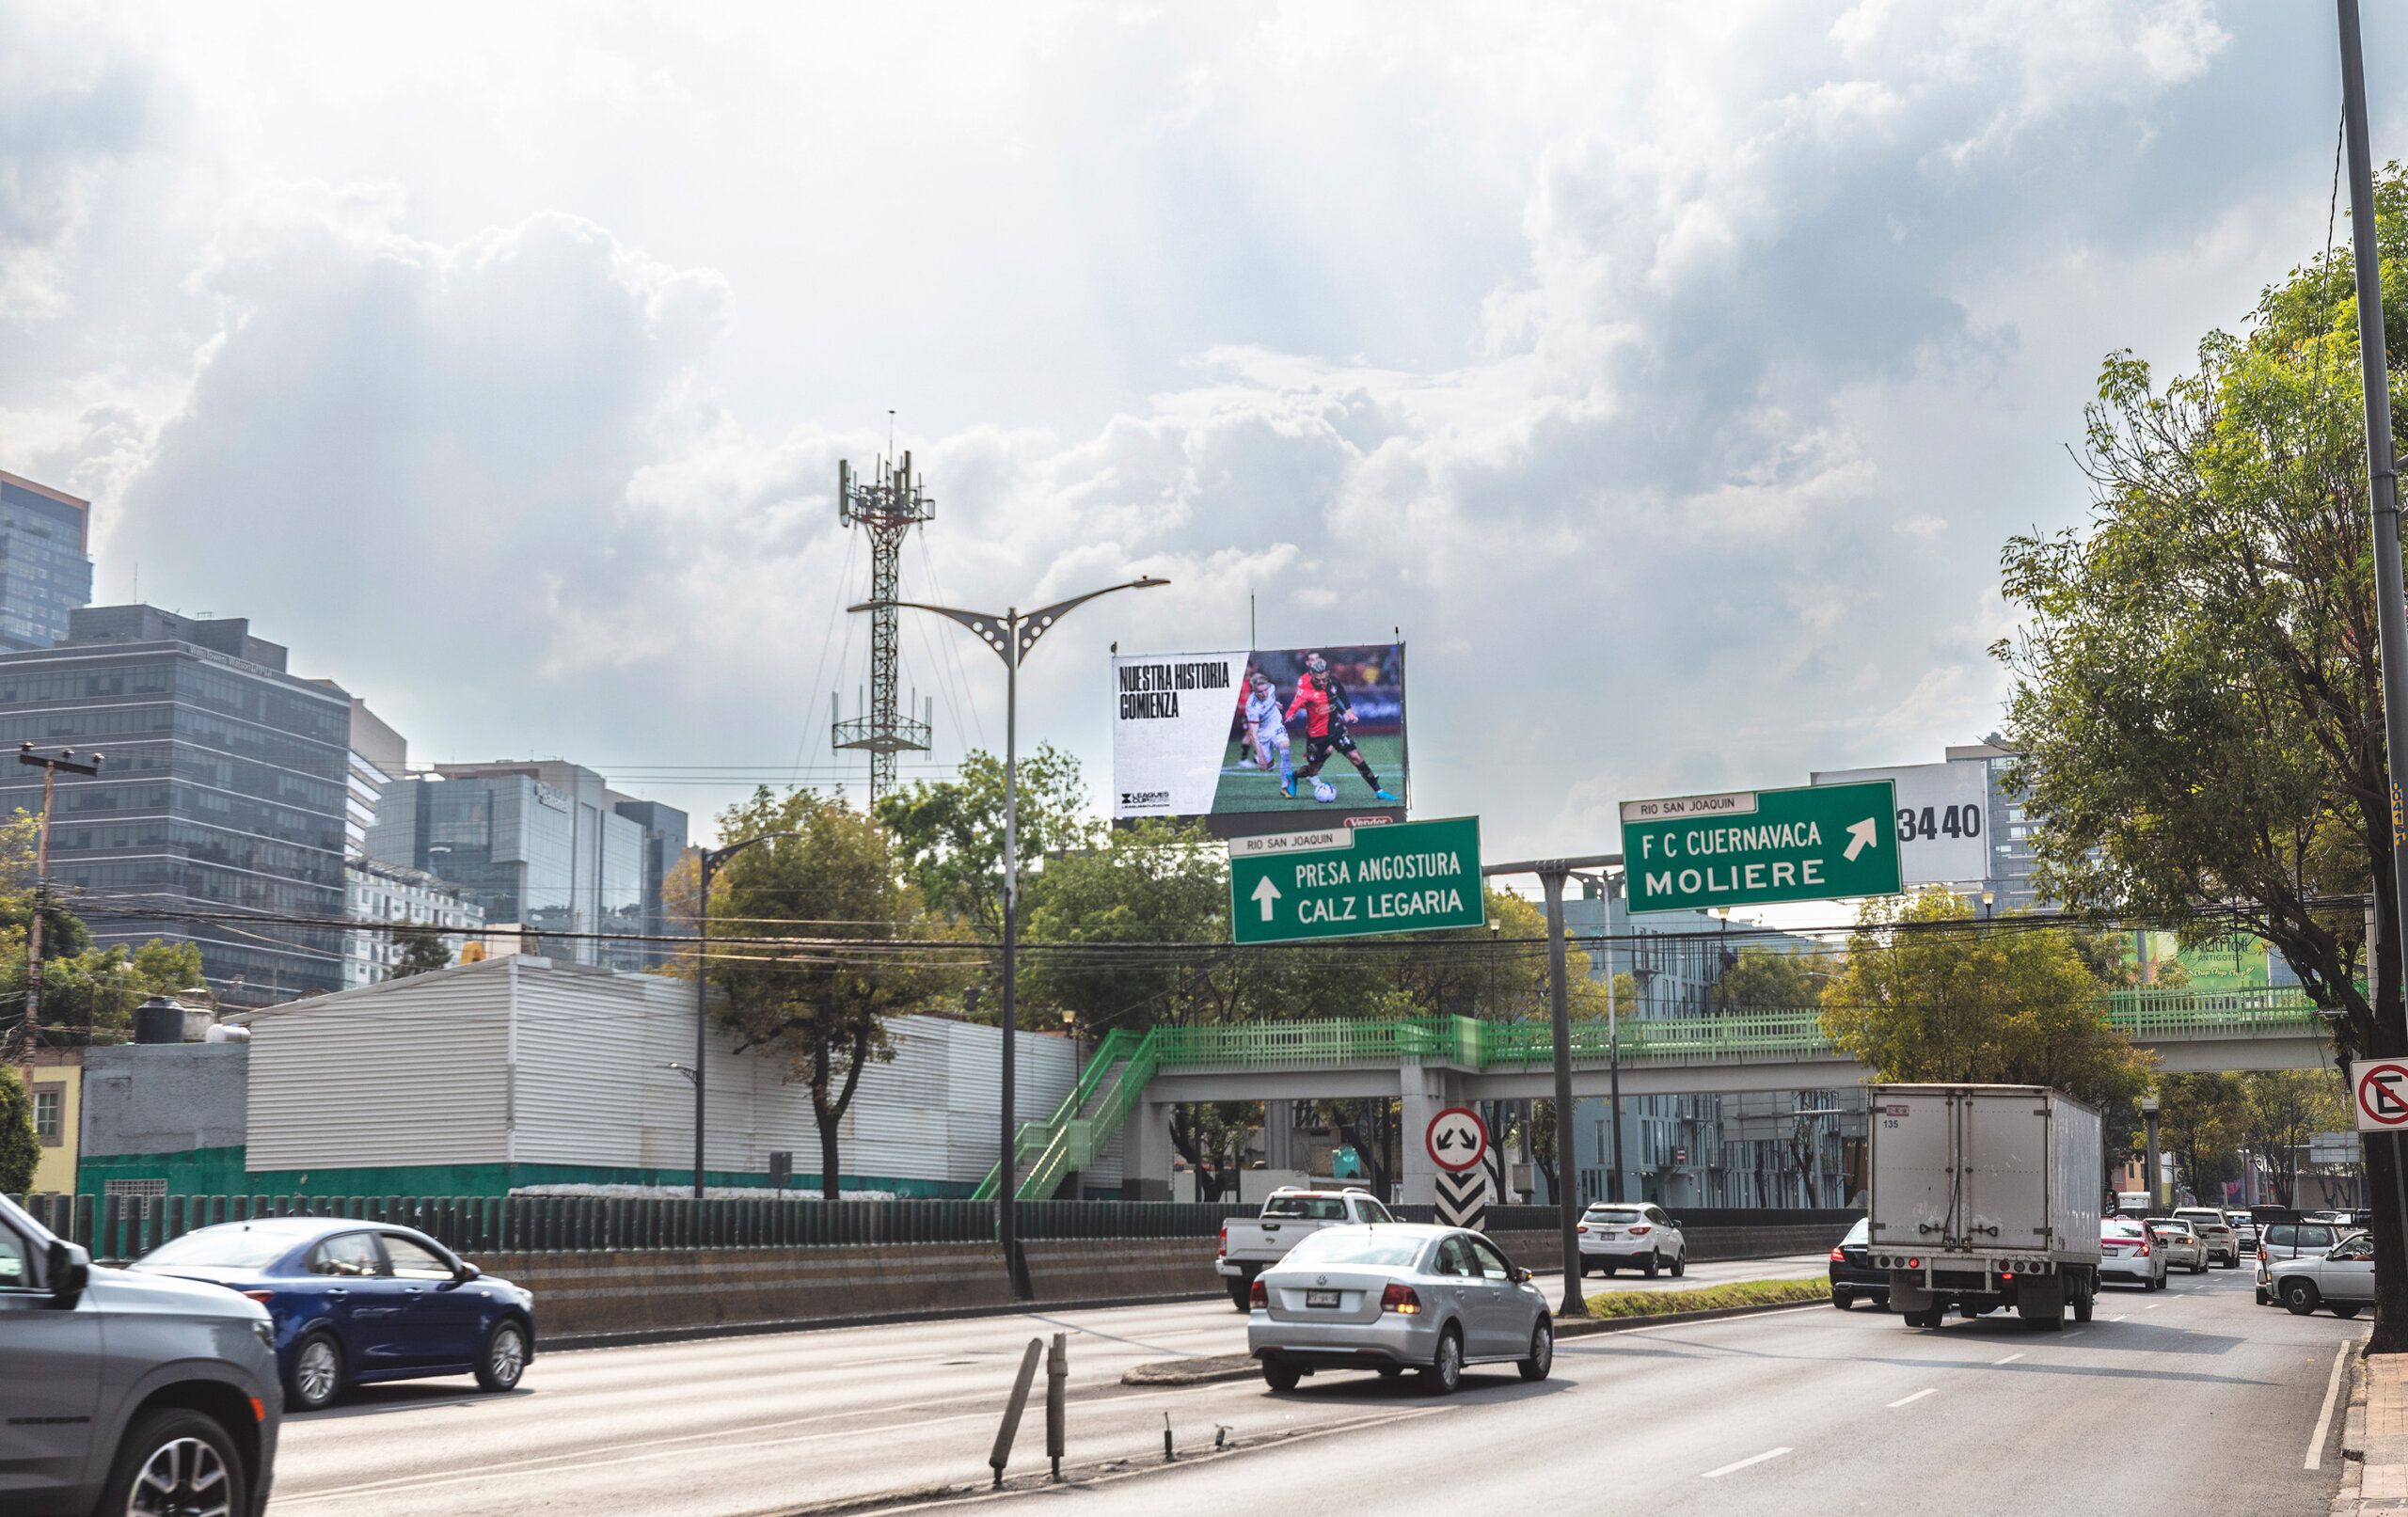 Nuestra Historia Comenza - Leagues Cup 2023 billboard along a highway in Mexico